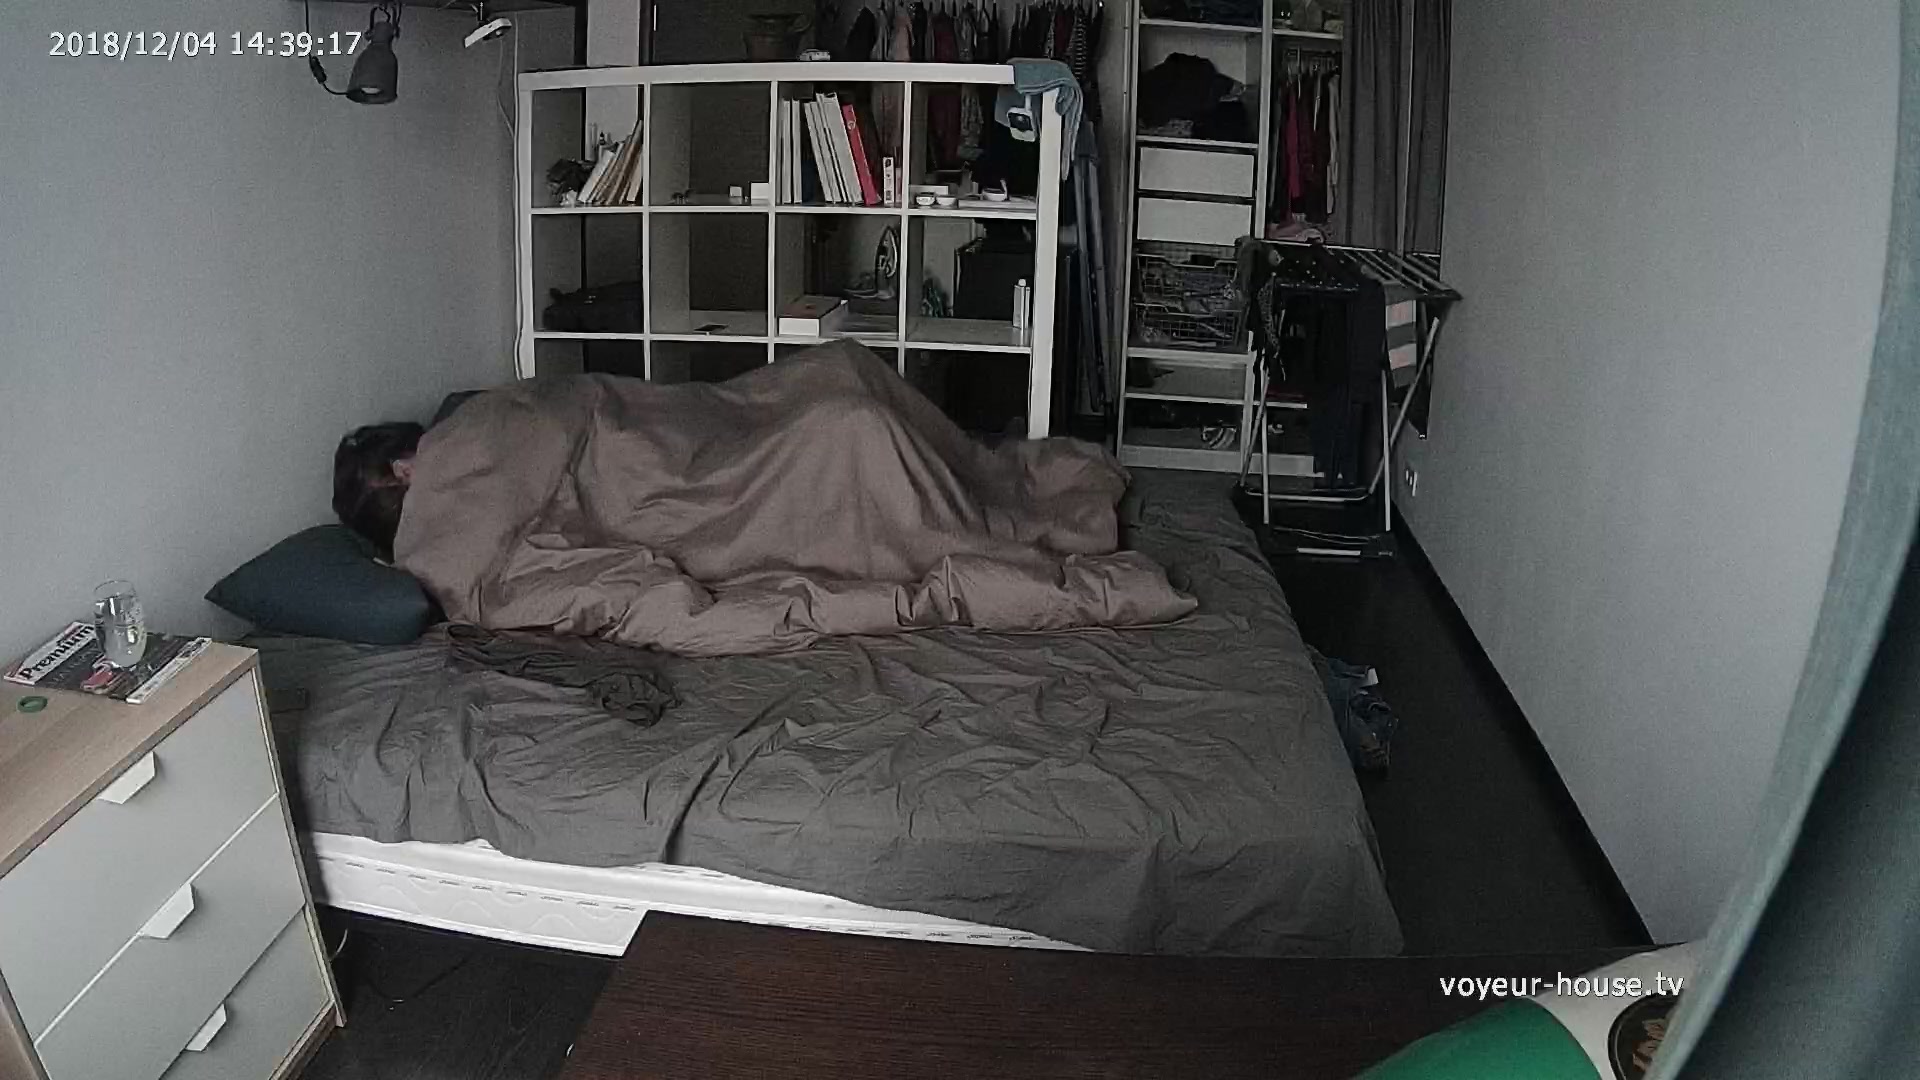 Aroused roommate sneakily fucks chick under blanket